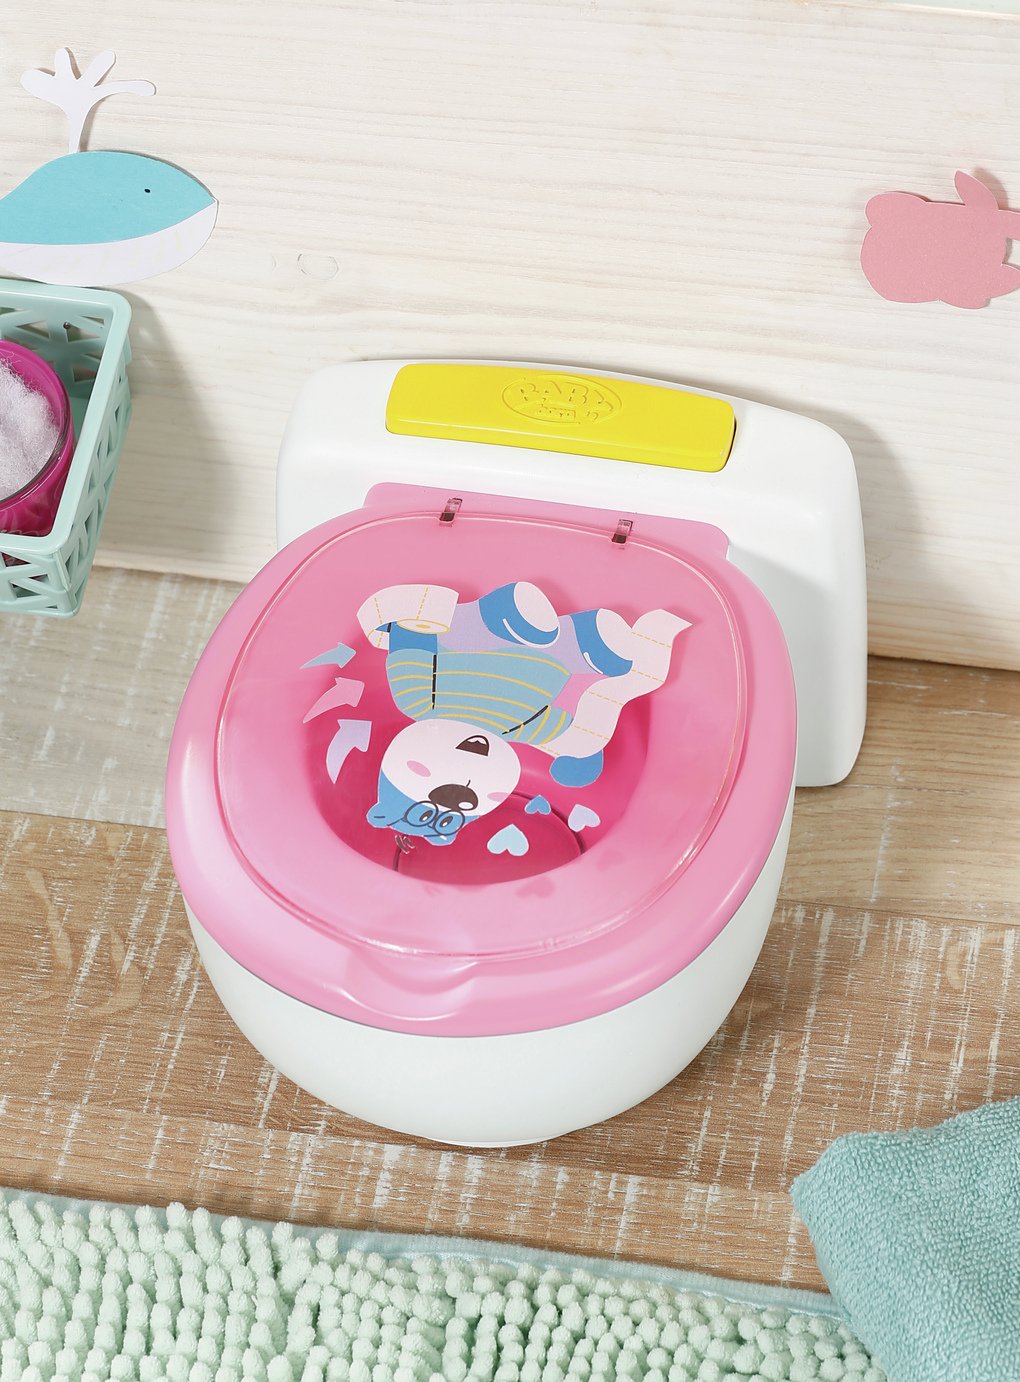 BABY born Poo Poo Toilet Review